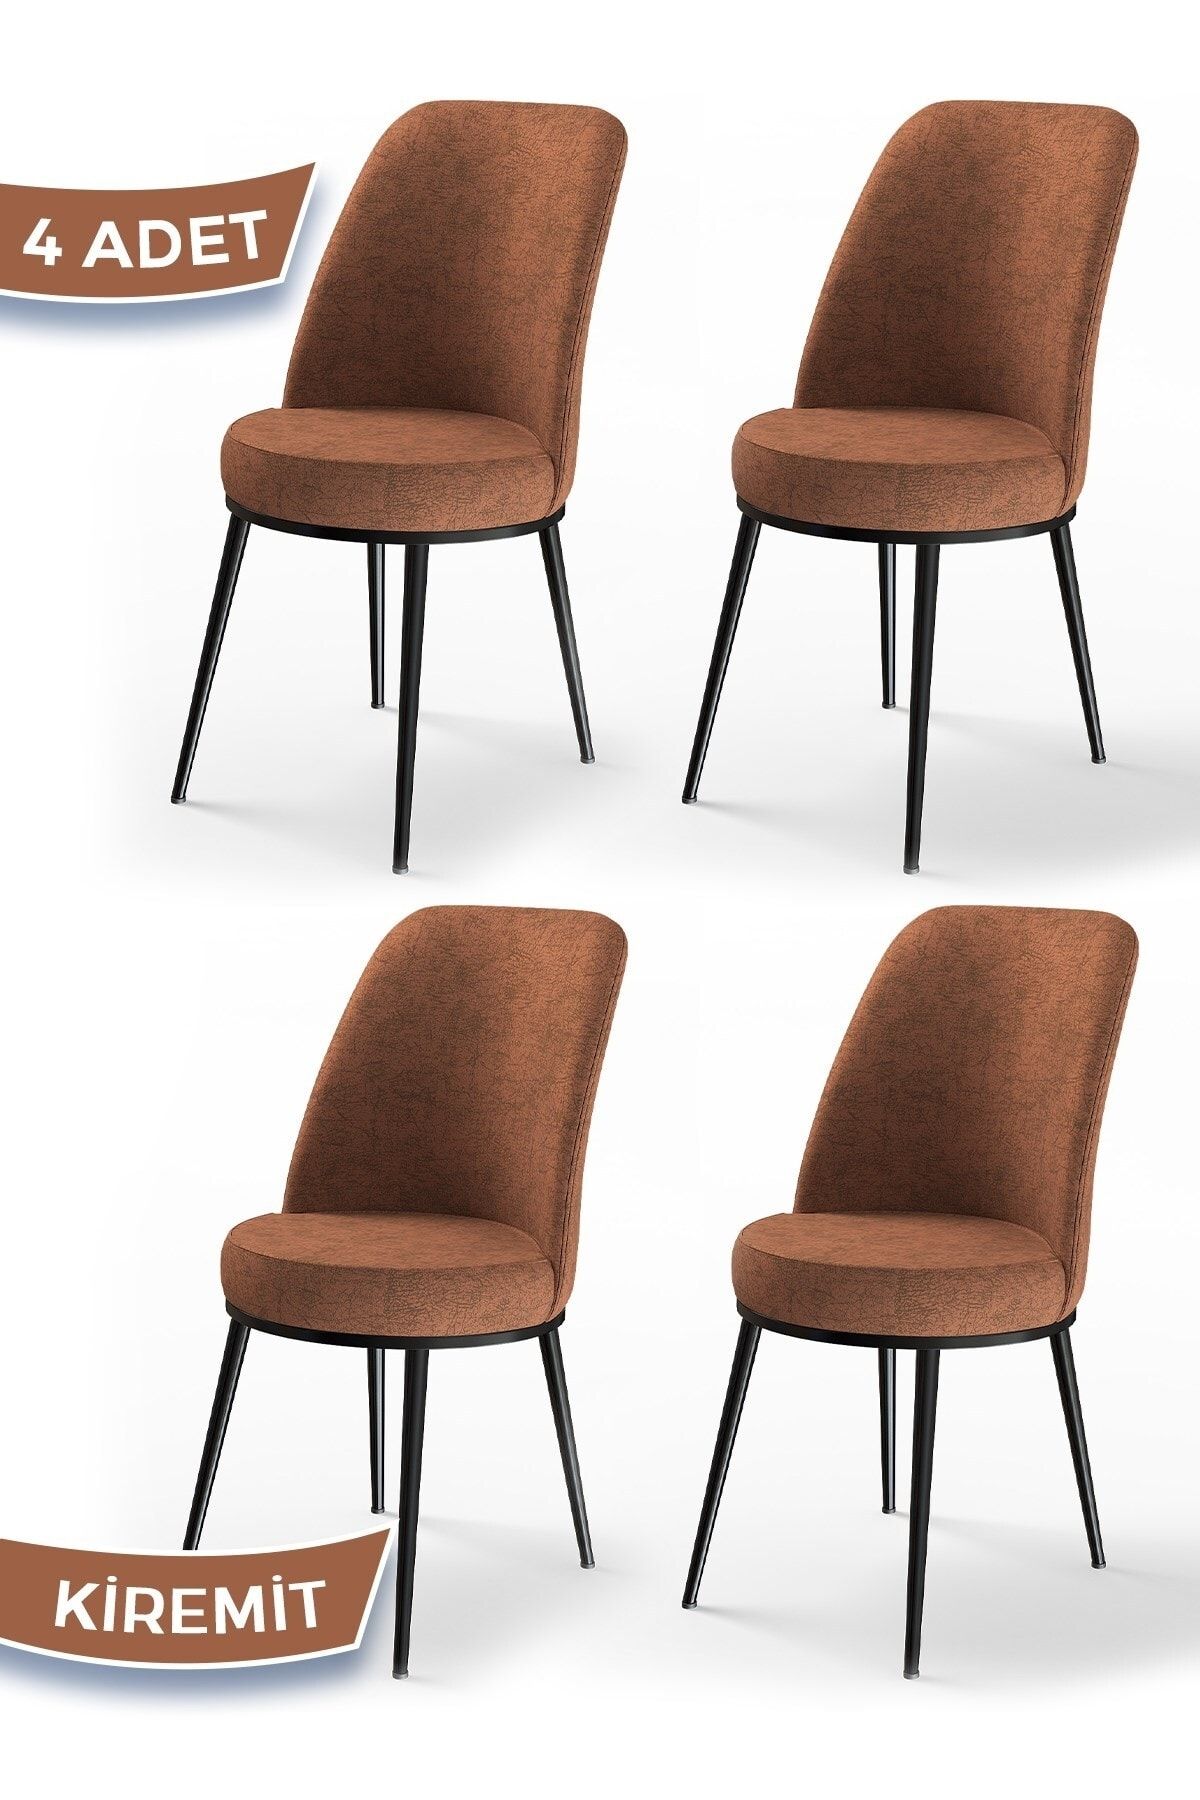 Canisa Concept Dexa Serisi, Üst Kalite Mutfak Sandalyesi, Metal Siyah Iskeletli, 4 Adet Kiremit Sandalye